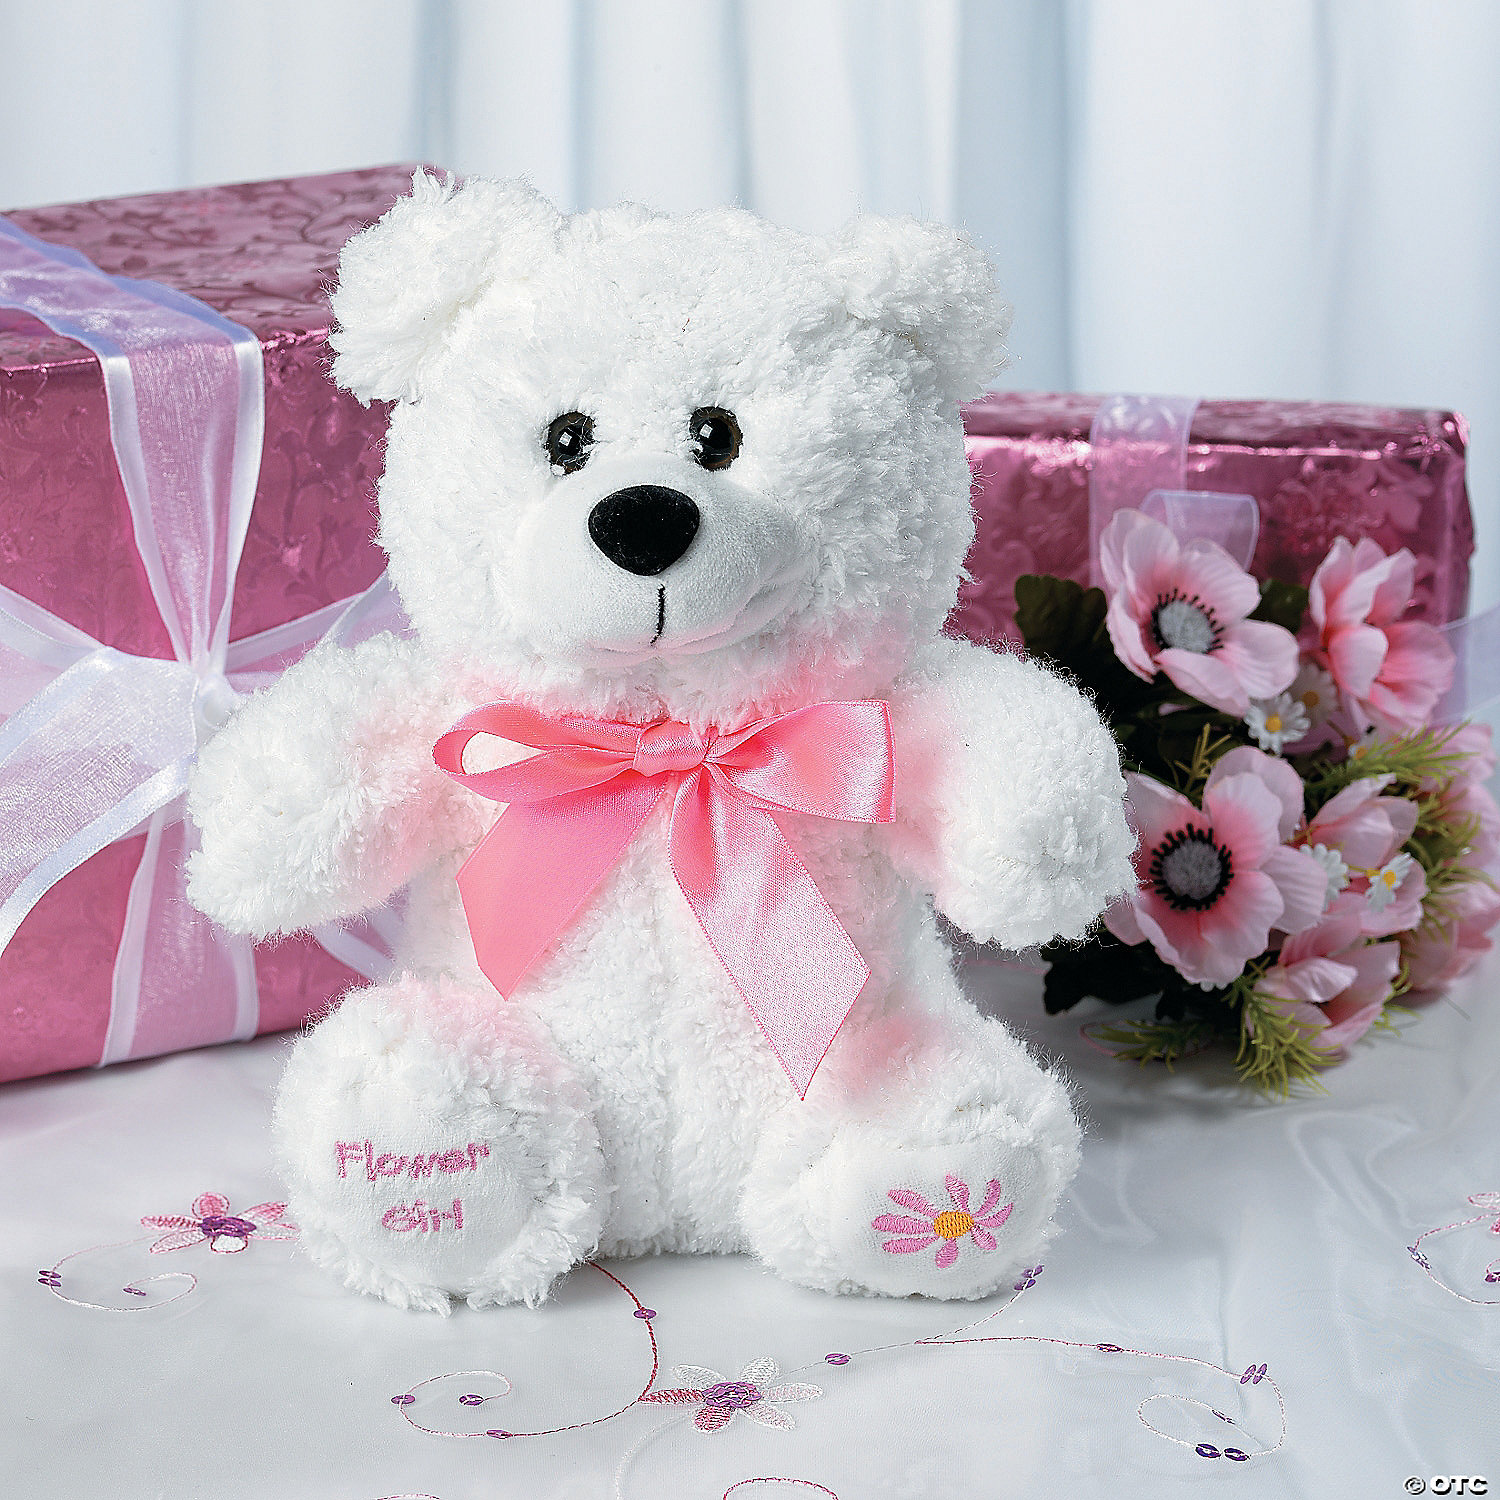 flower girl teddy bear gift personalised